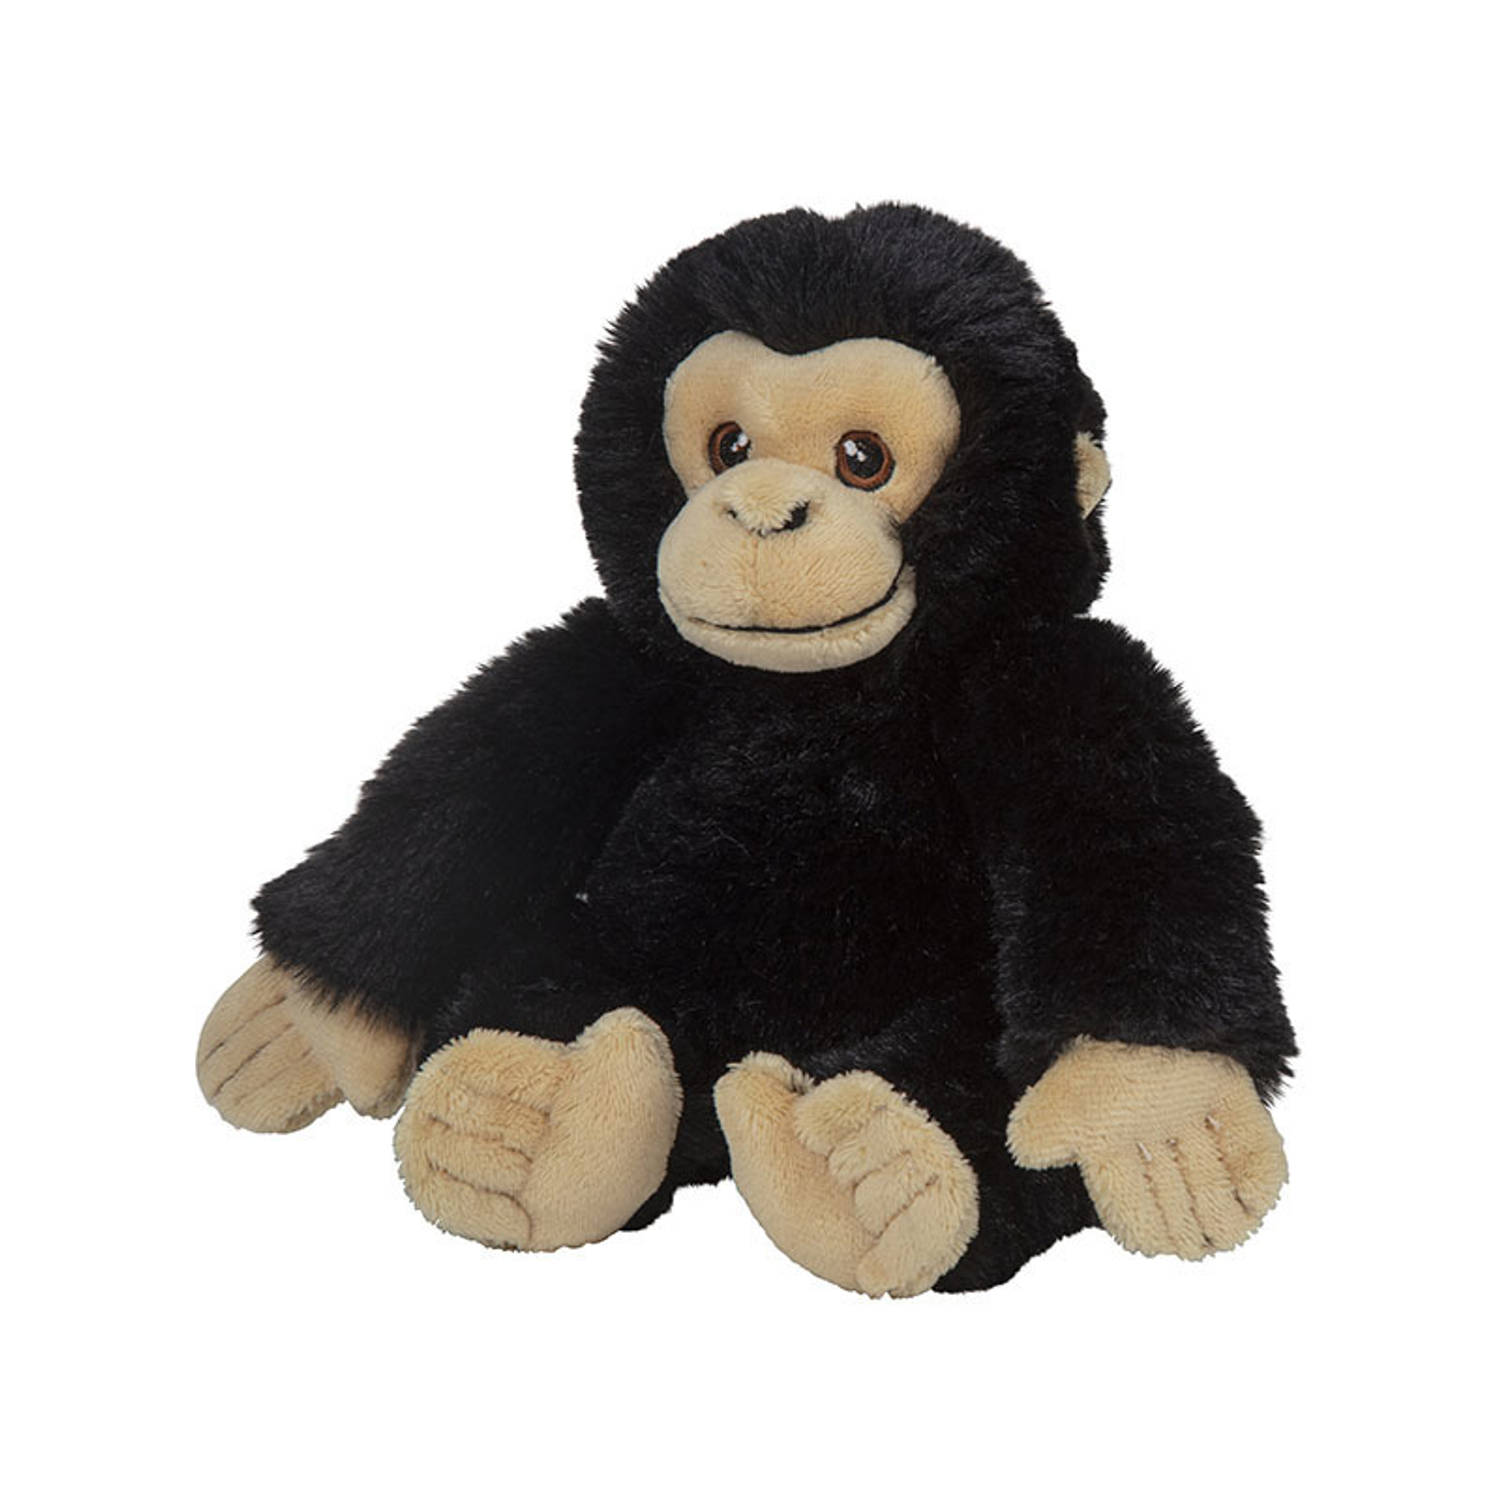 Pluche dieren knuffels Chimpansee aap van 16 cm - Knuffeldieren speelgoed